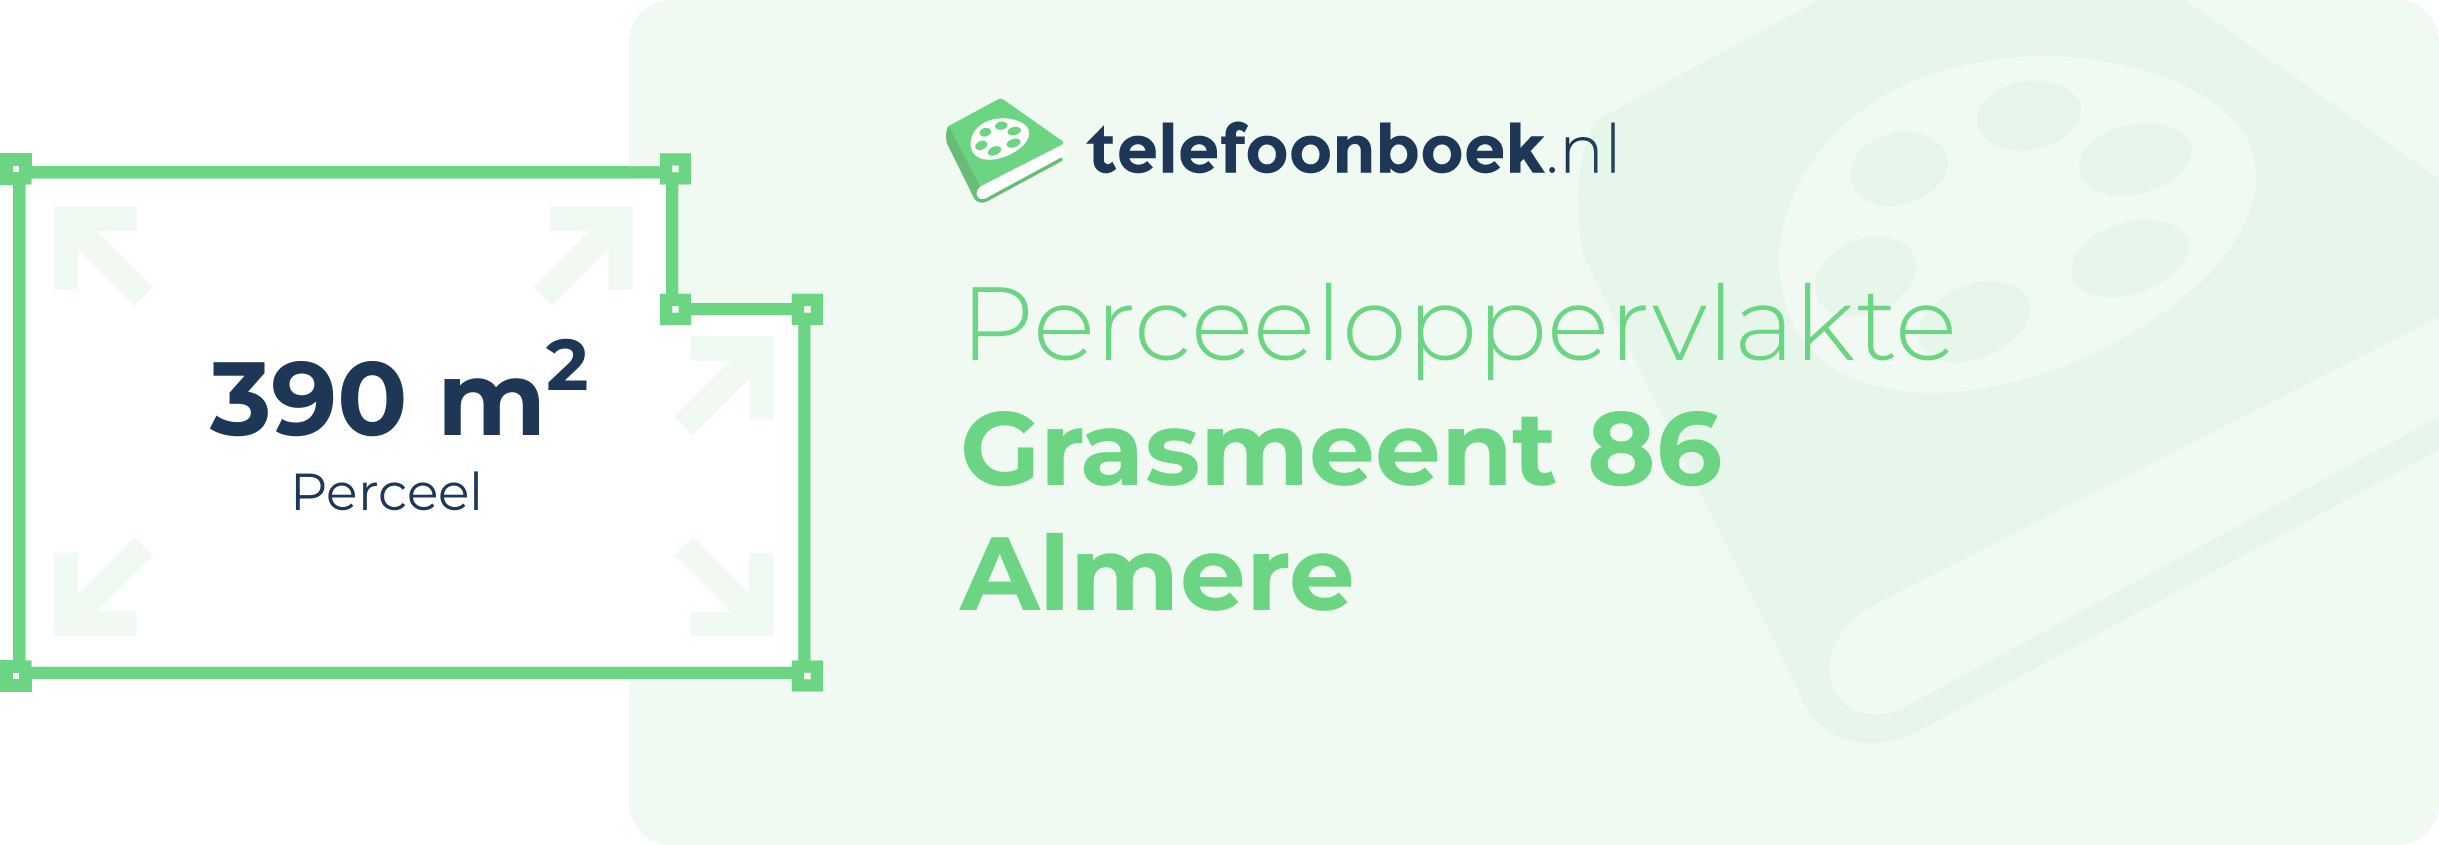 Perceeloppervlakte Grasmeent 86 Almere